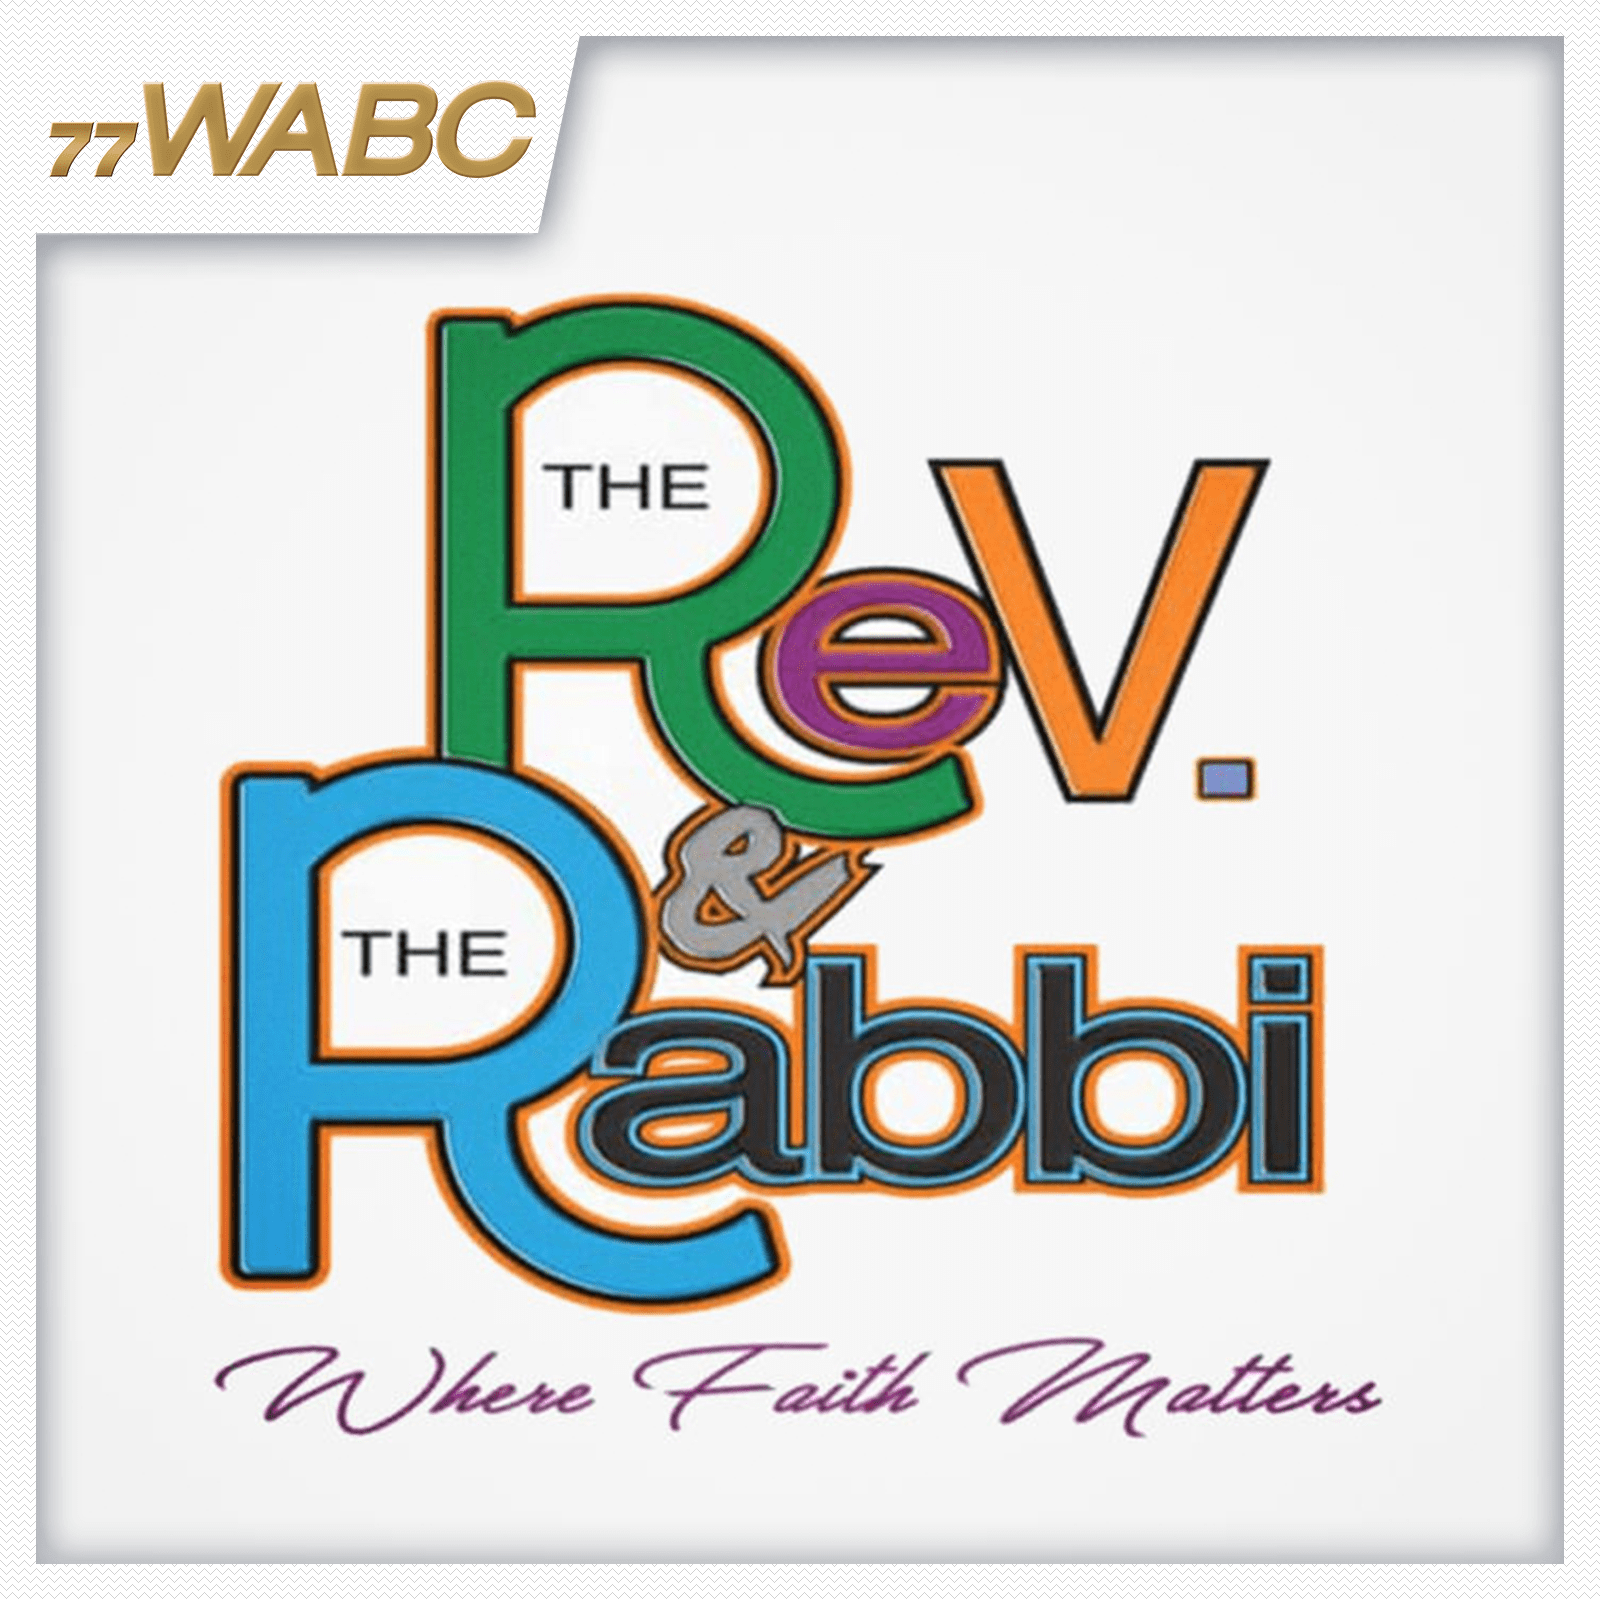 rev-and-the-rabbi-new-logo981183